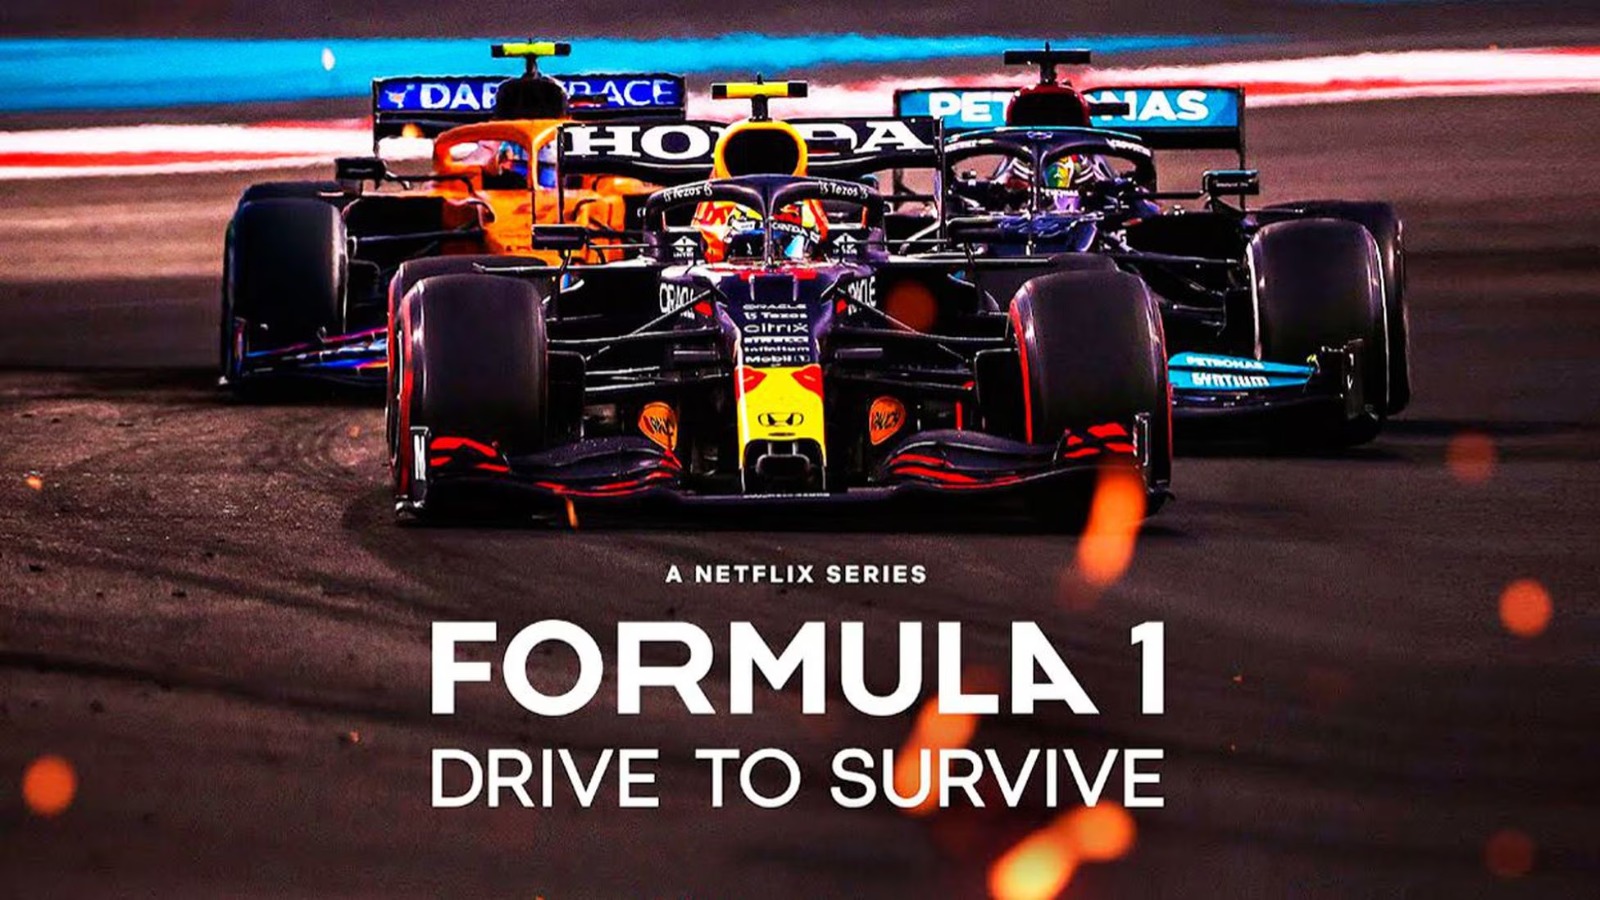 Formula 1: Drive Baru untuk Bertahan Musim 5 menghadapi Reaksi BESAR, penggemar SLATE musim baru menjadi ‘Kurang dengan titik buta yang mencolok’